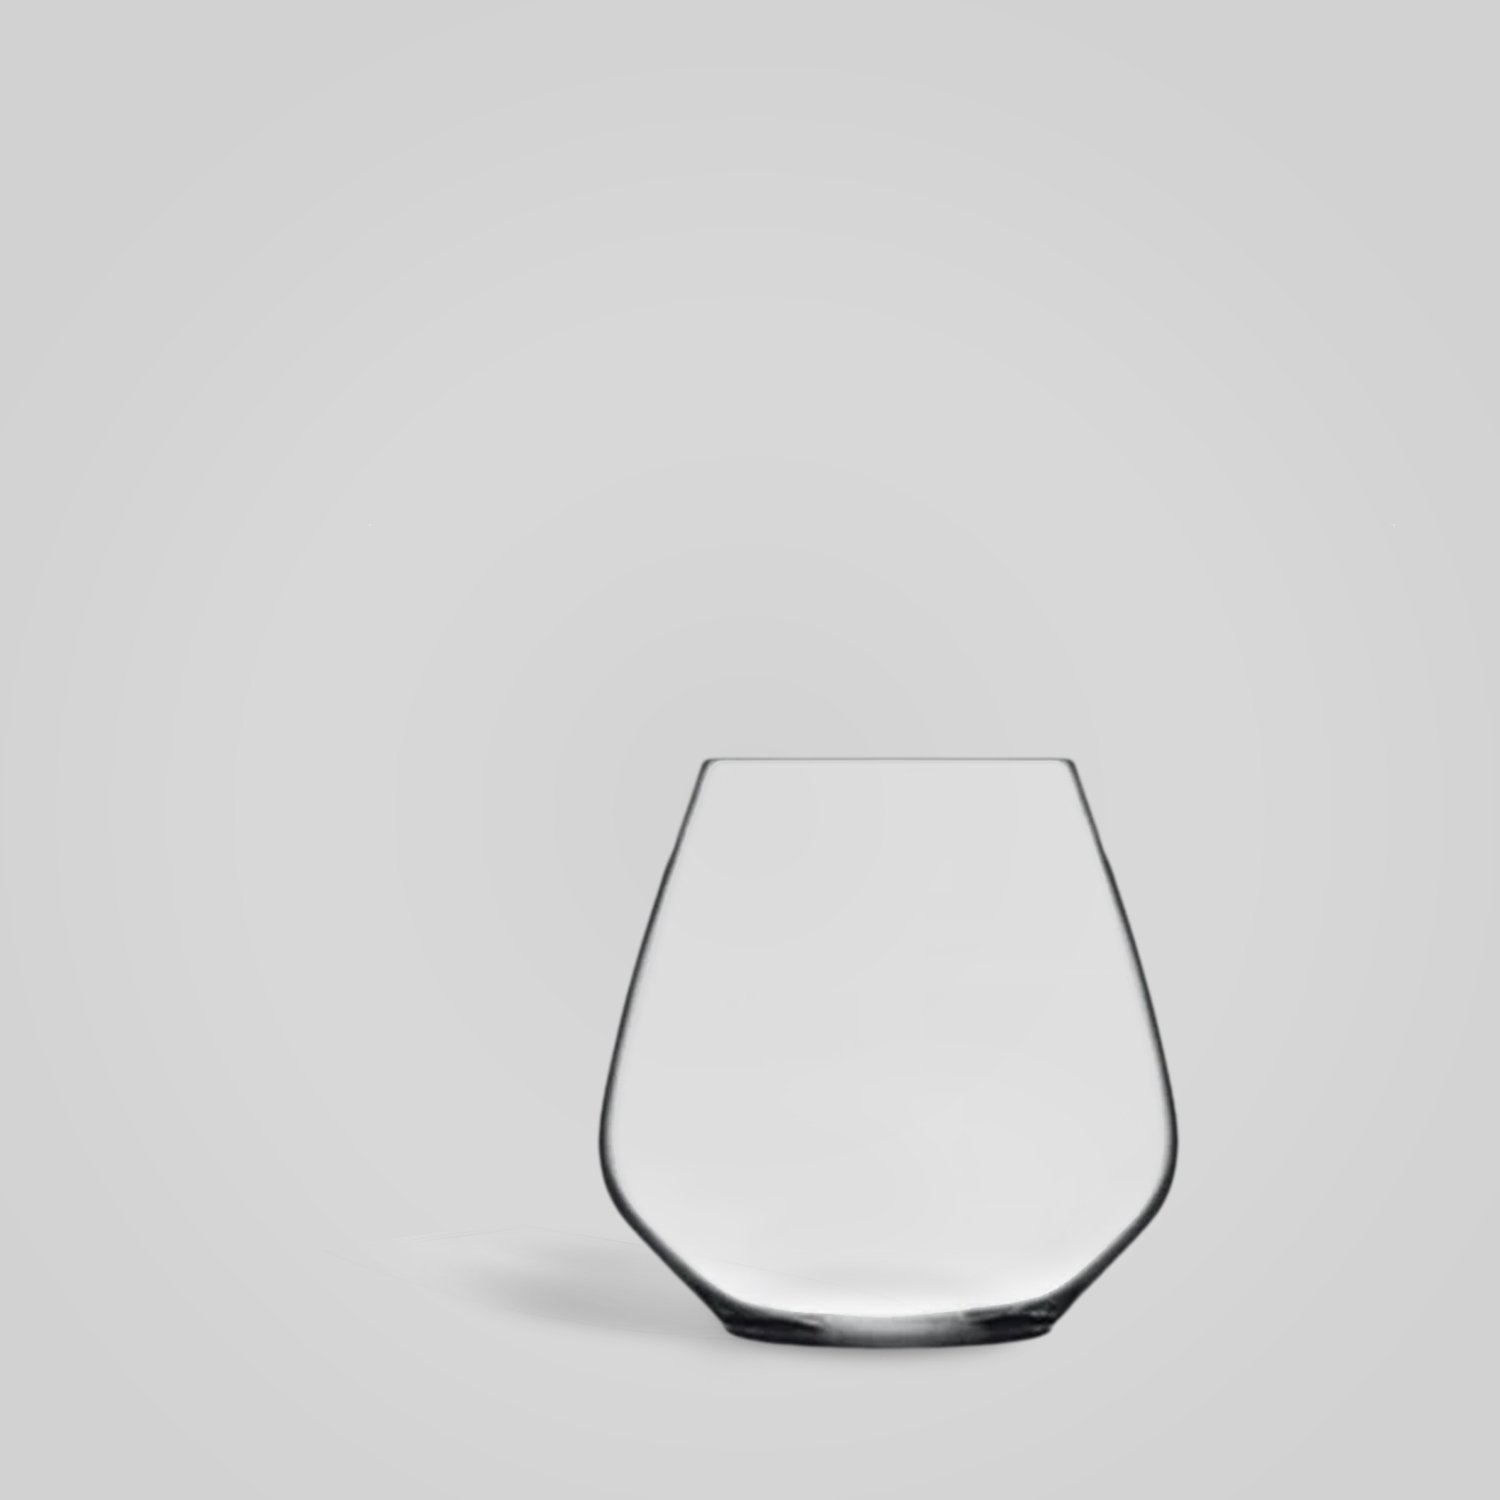 Italian Wine Glasses